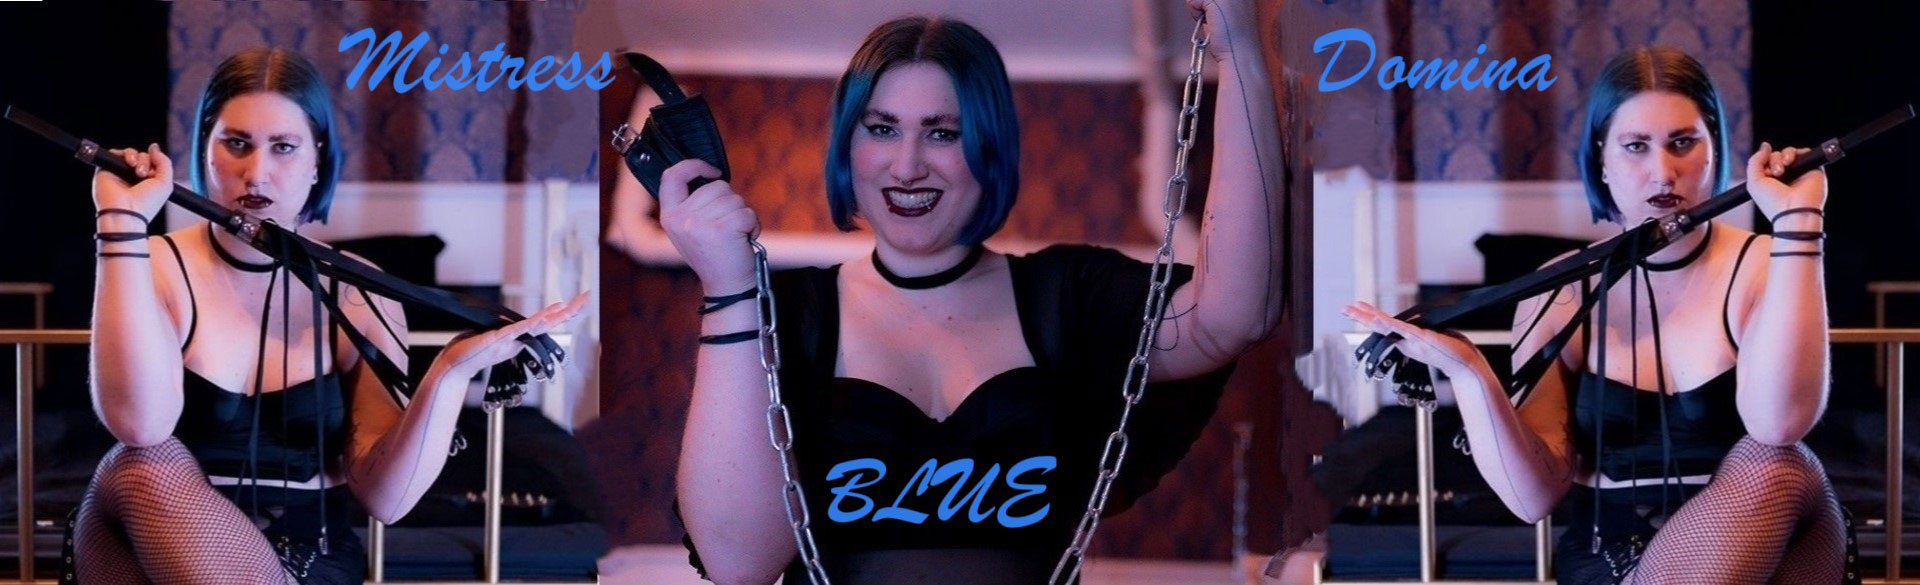 Mistress Blue - Bizarrstudio Elegance - München